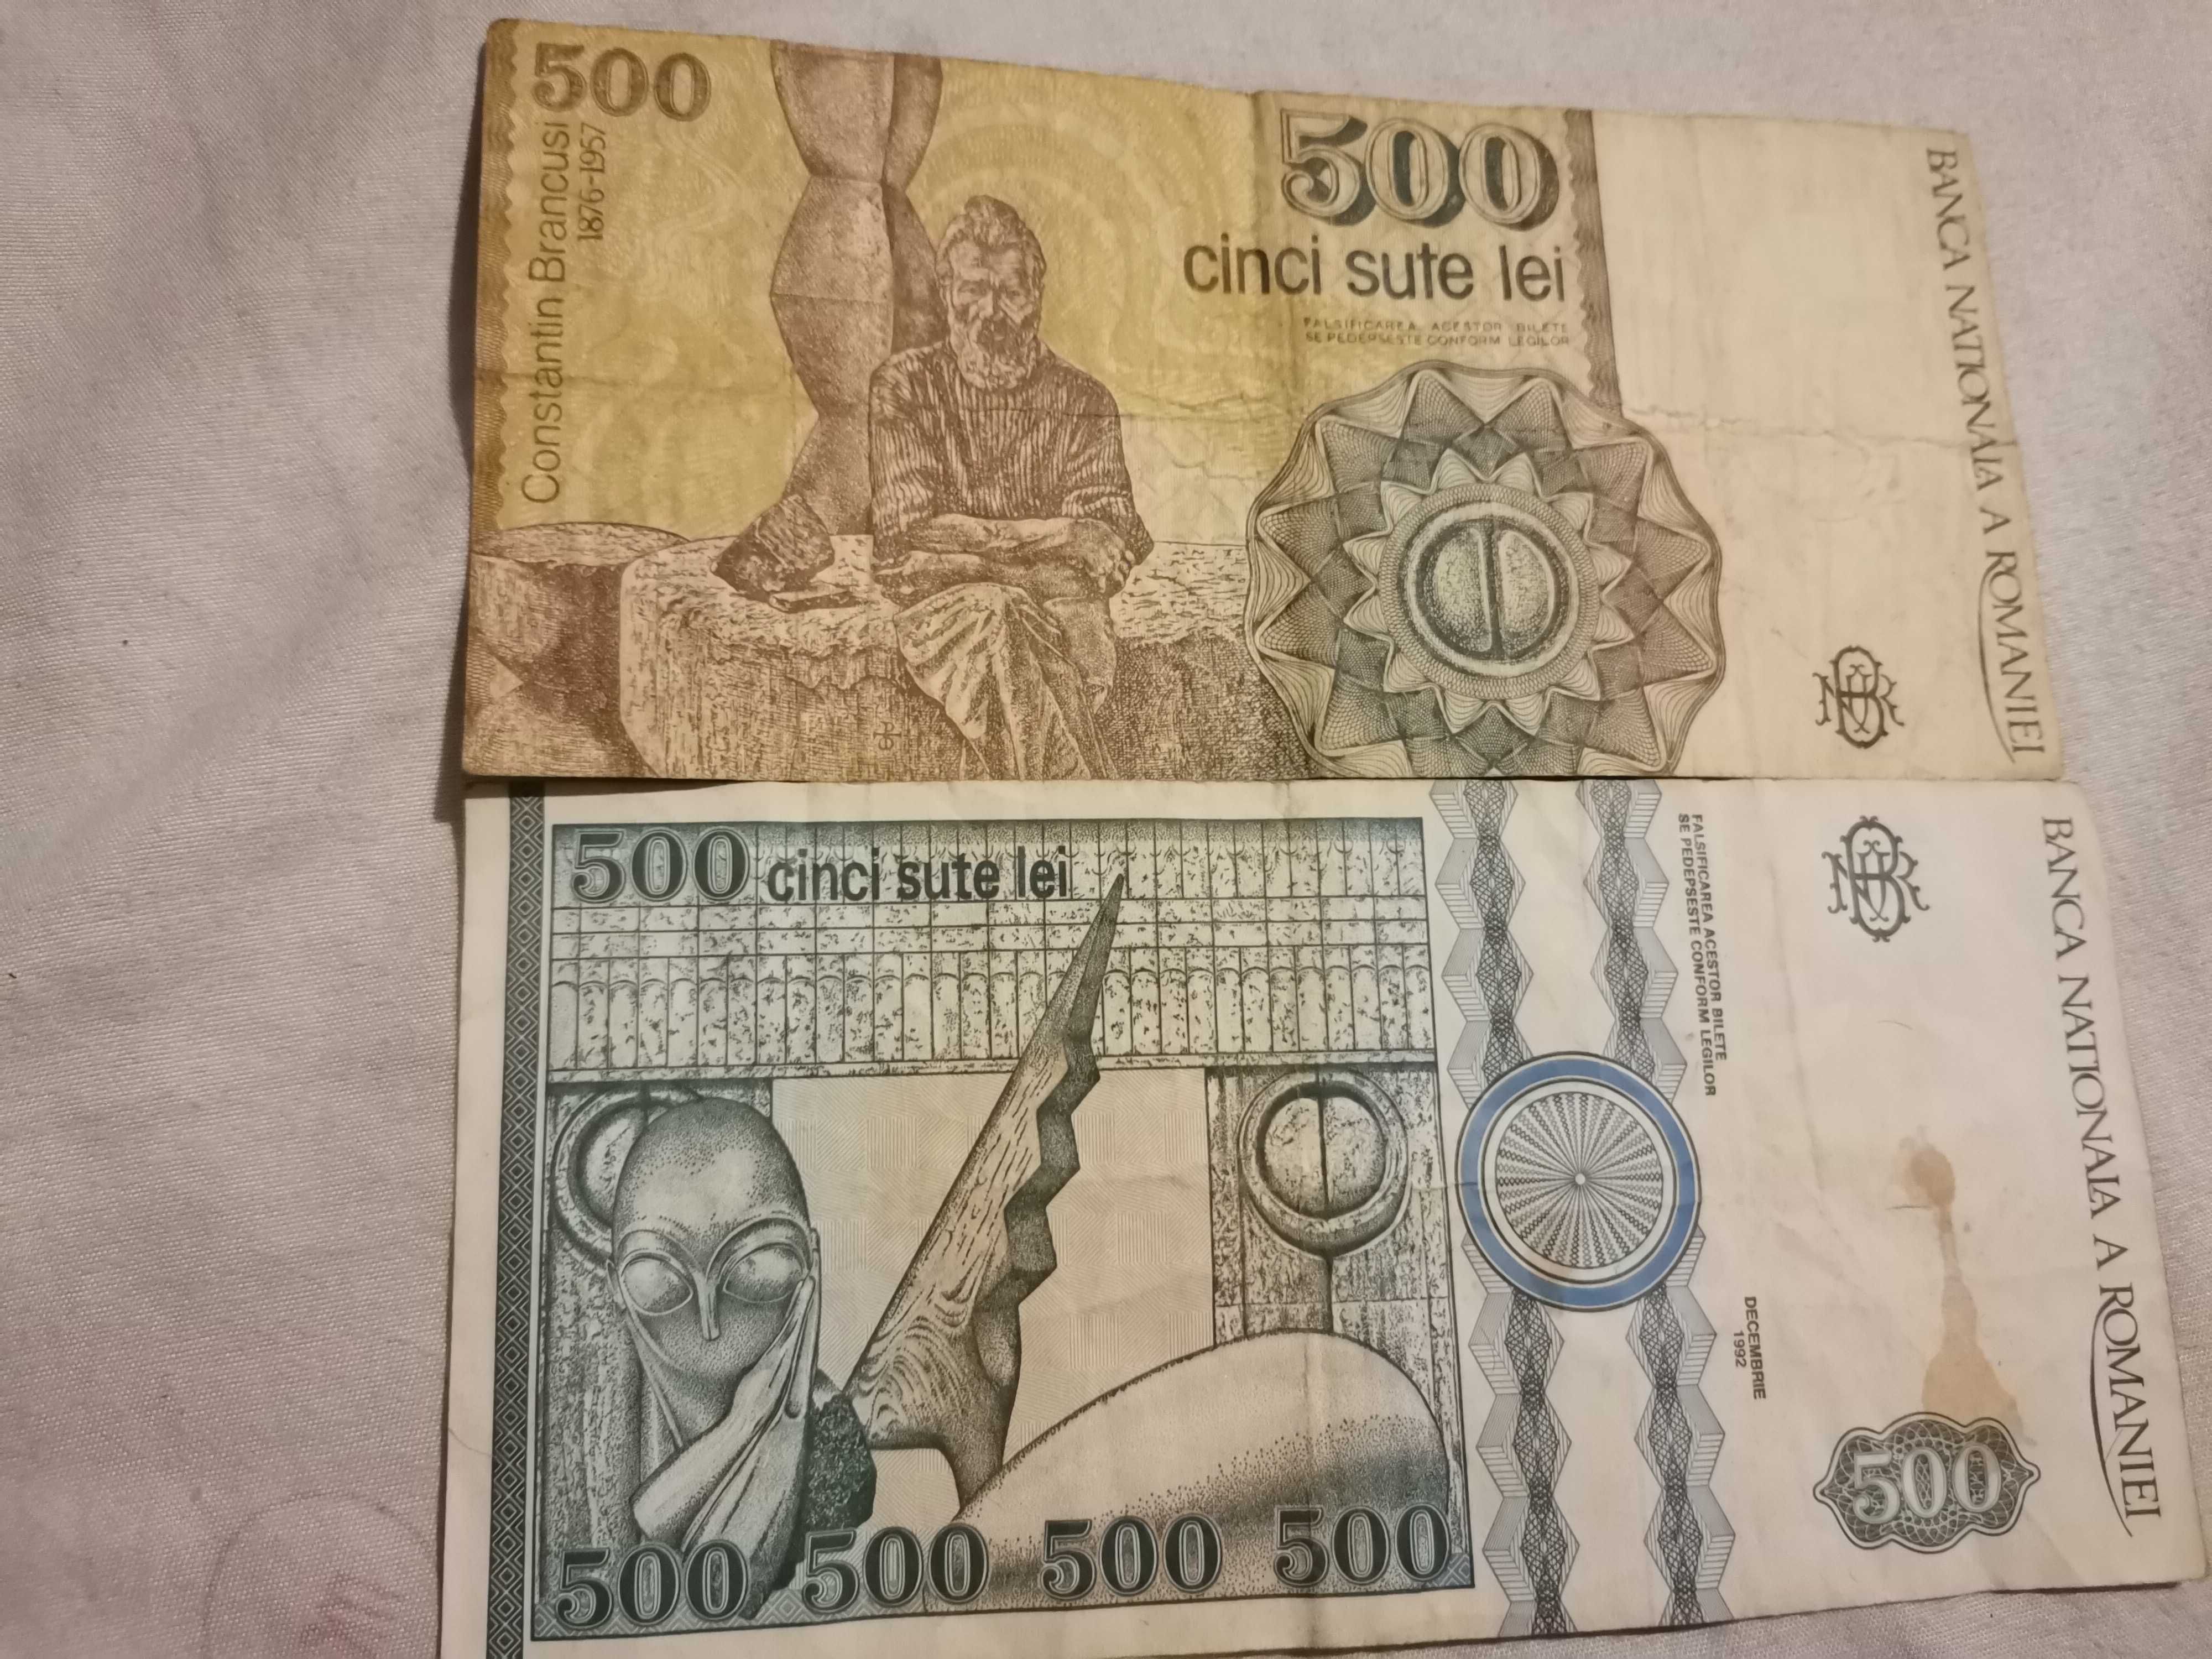 Bancnote și monede românești, 1poloneza și Iugoslava